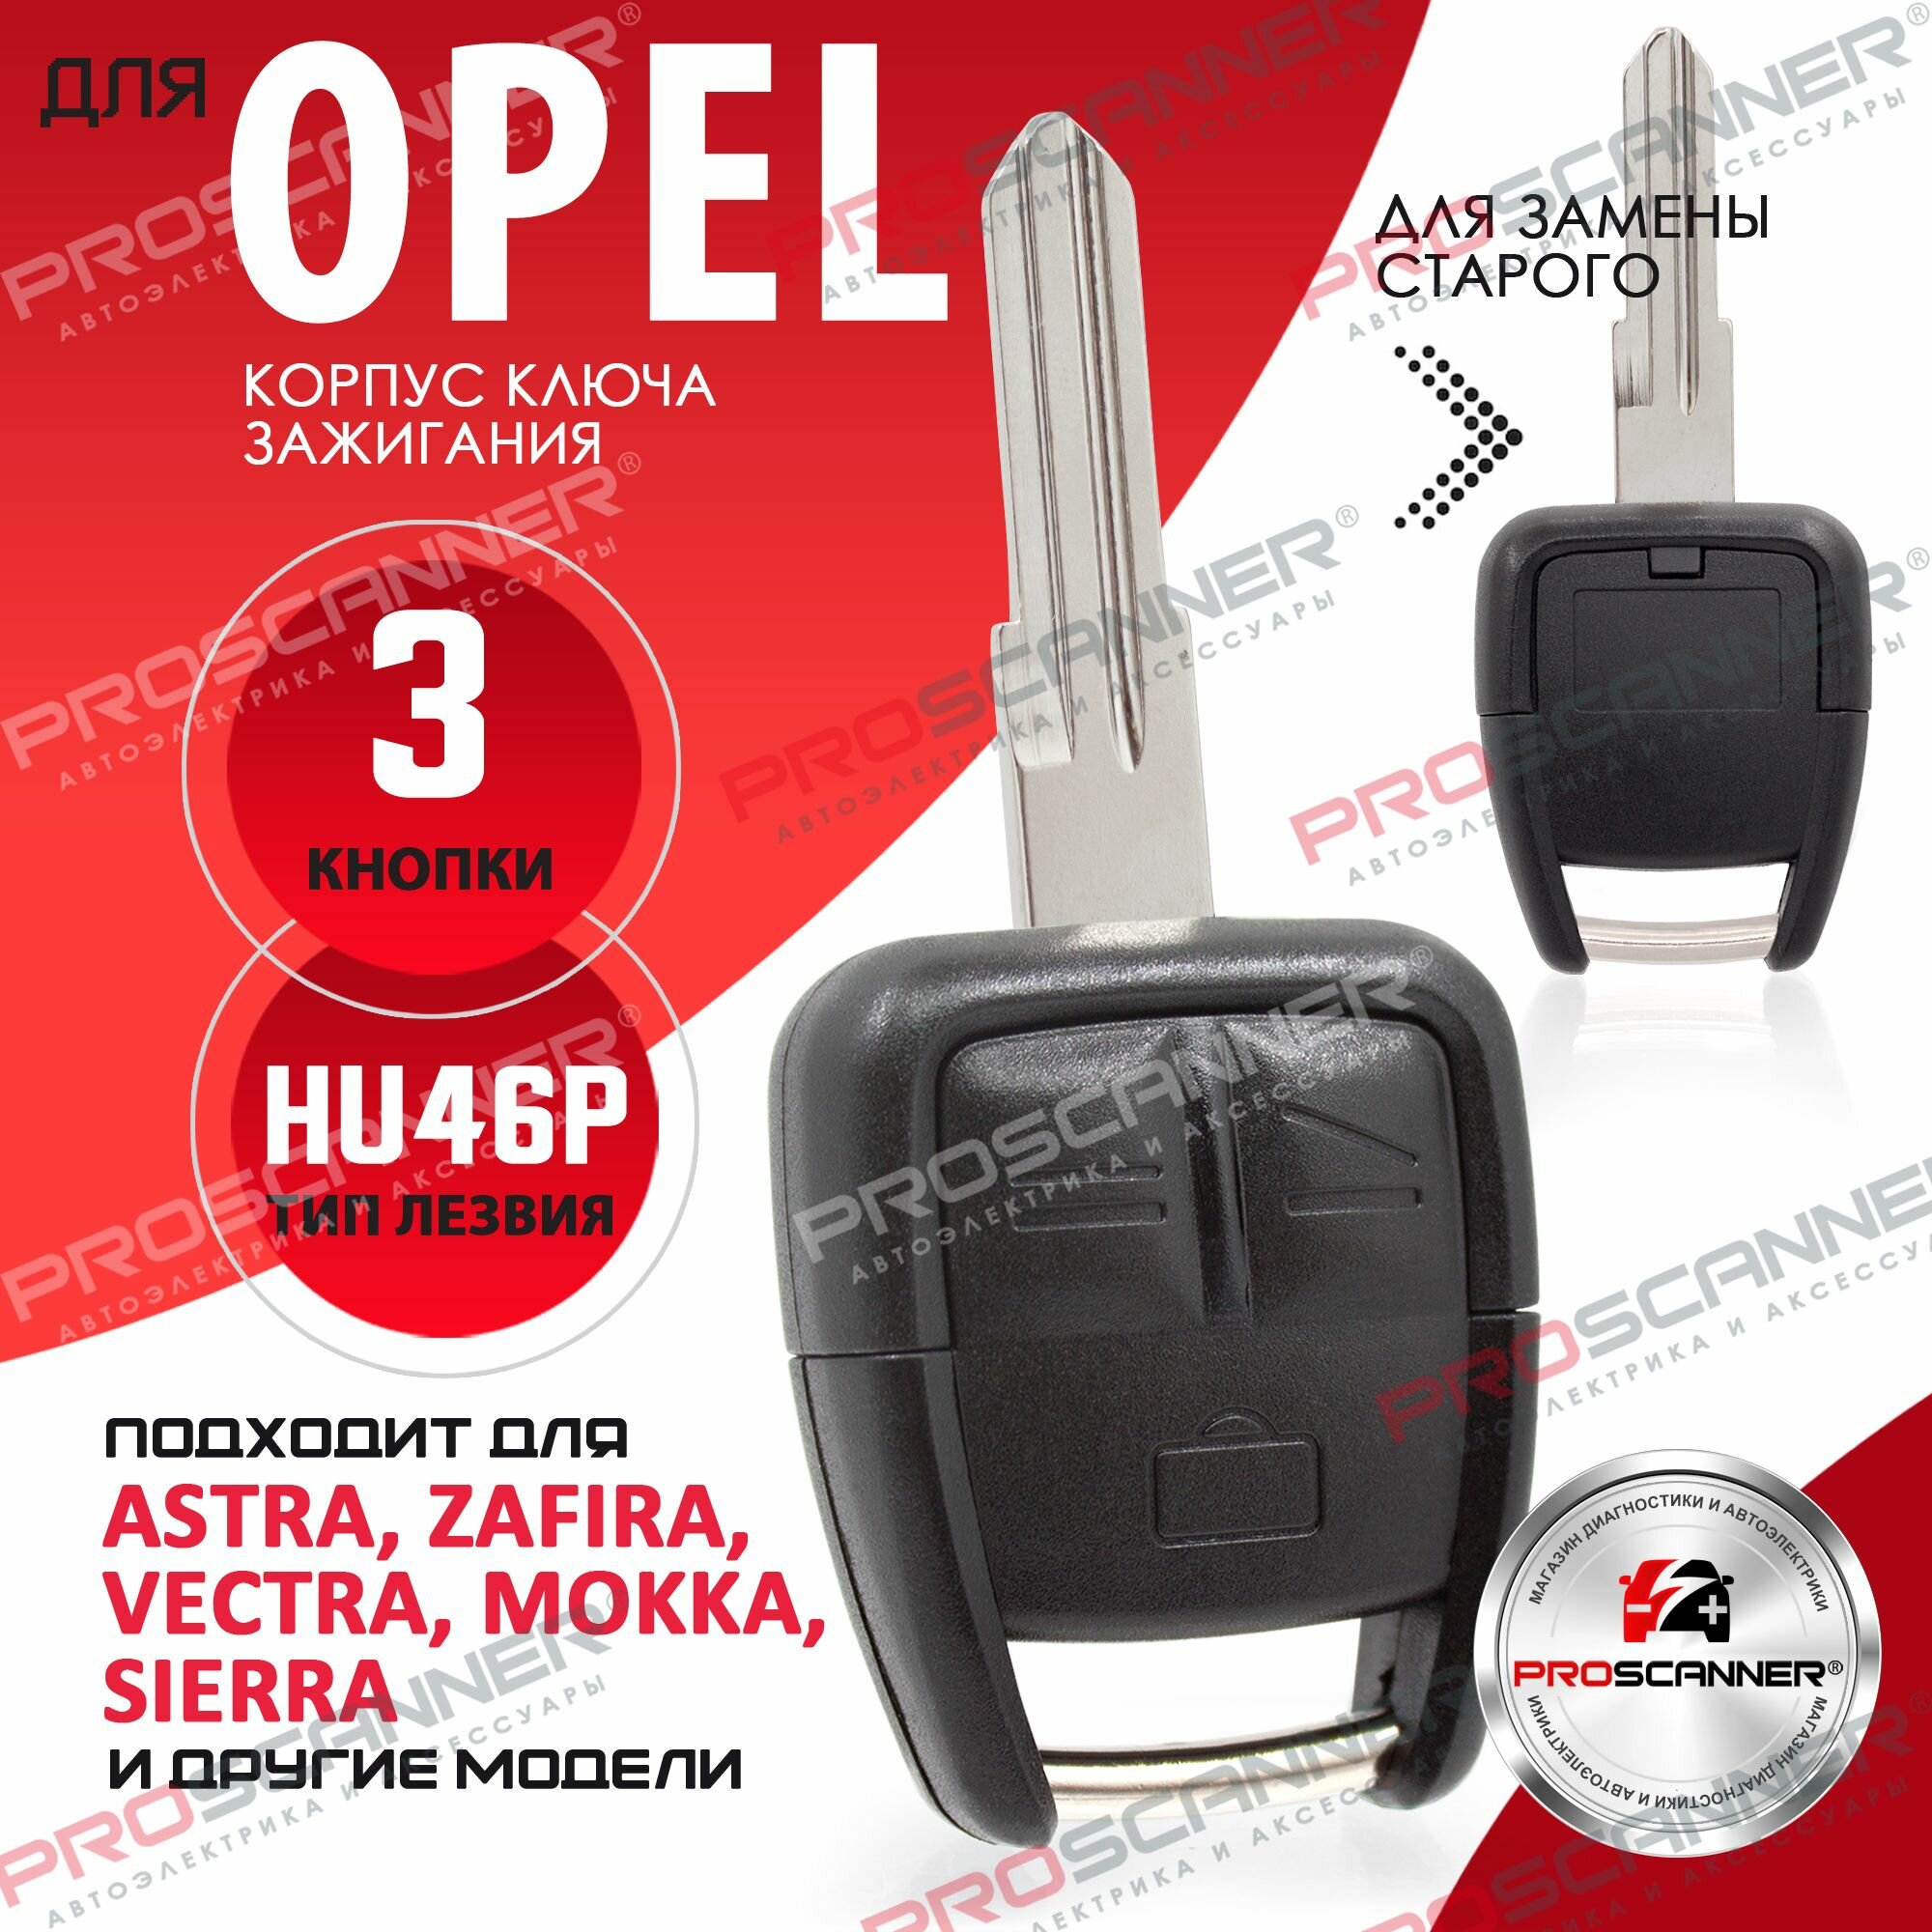 Корпус ключа зажигания для Opel Astra Zafira Vectra Signum Omega Frontera - 1 штука (3х кнопочный ключ, лезвие HU46P)